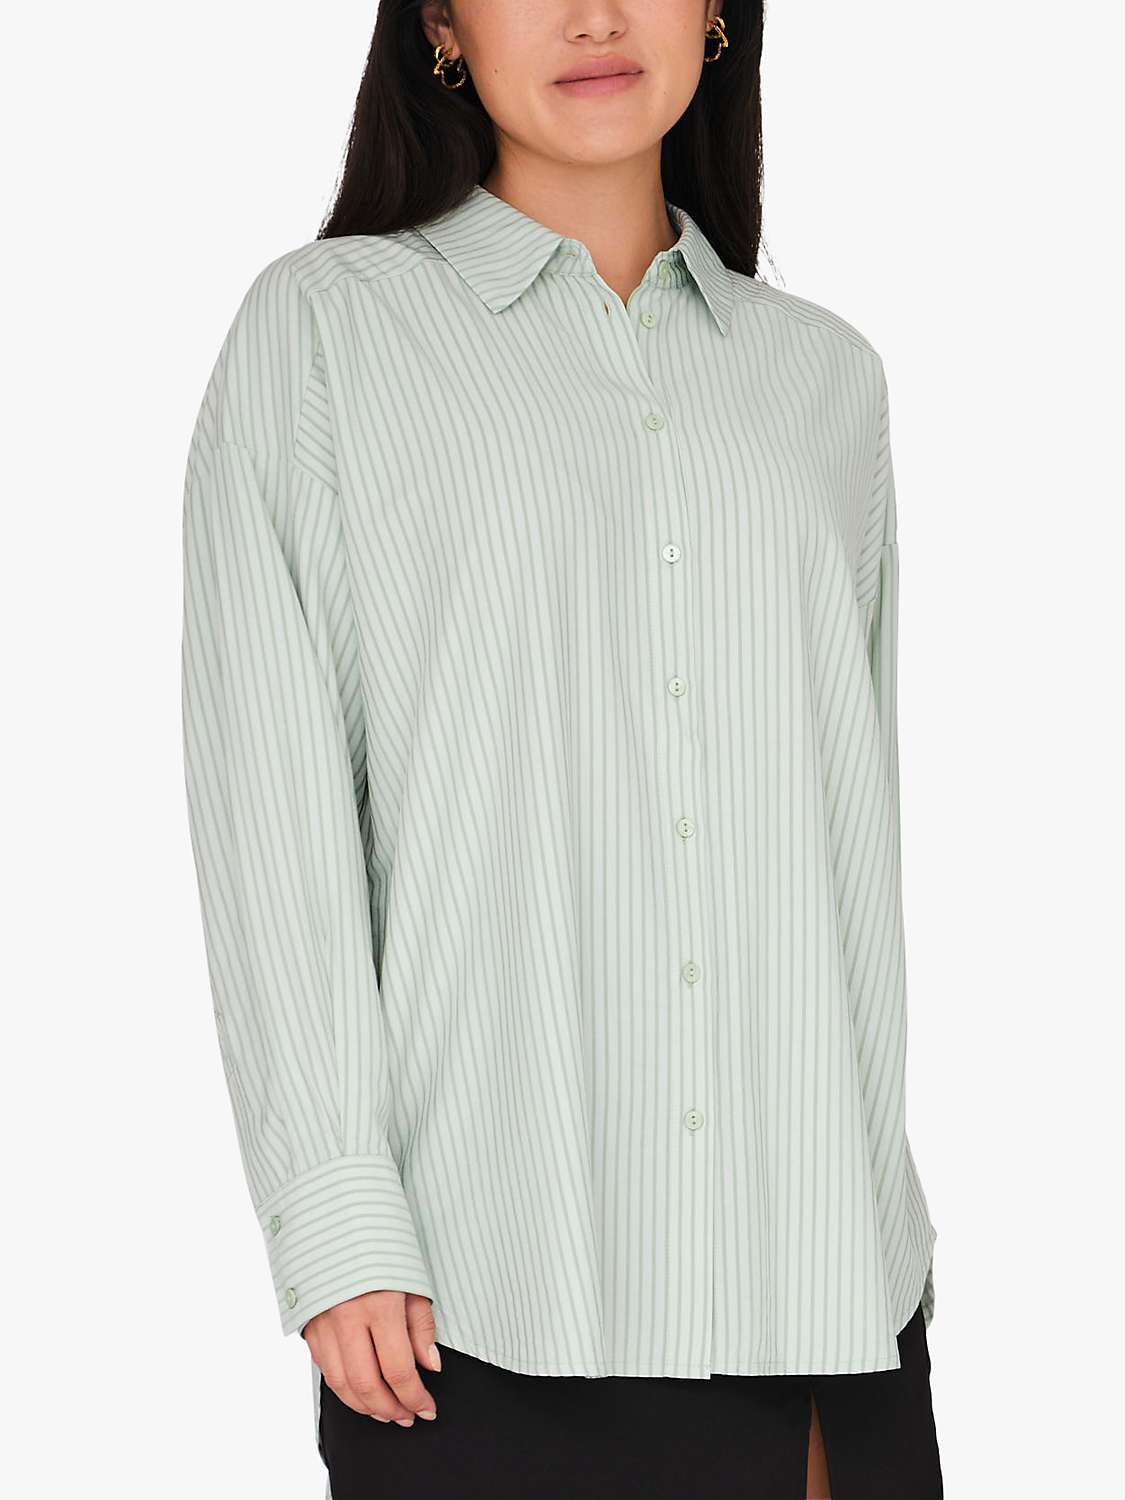 Buy A-VIEW Sonny Rose Detail Shirt, Mint Online at johnlewis.com